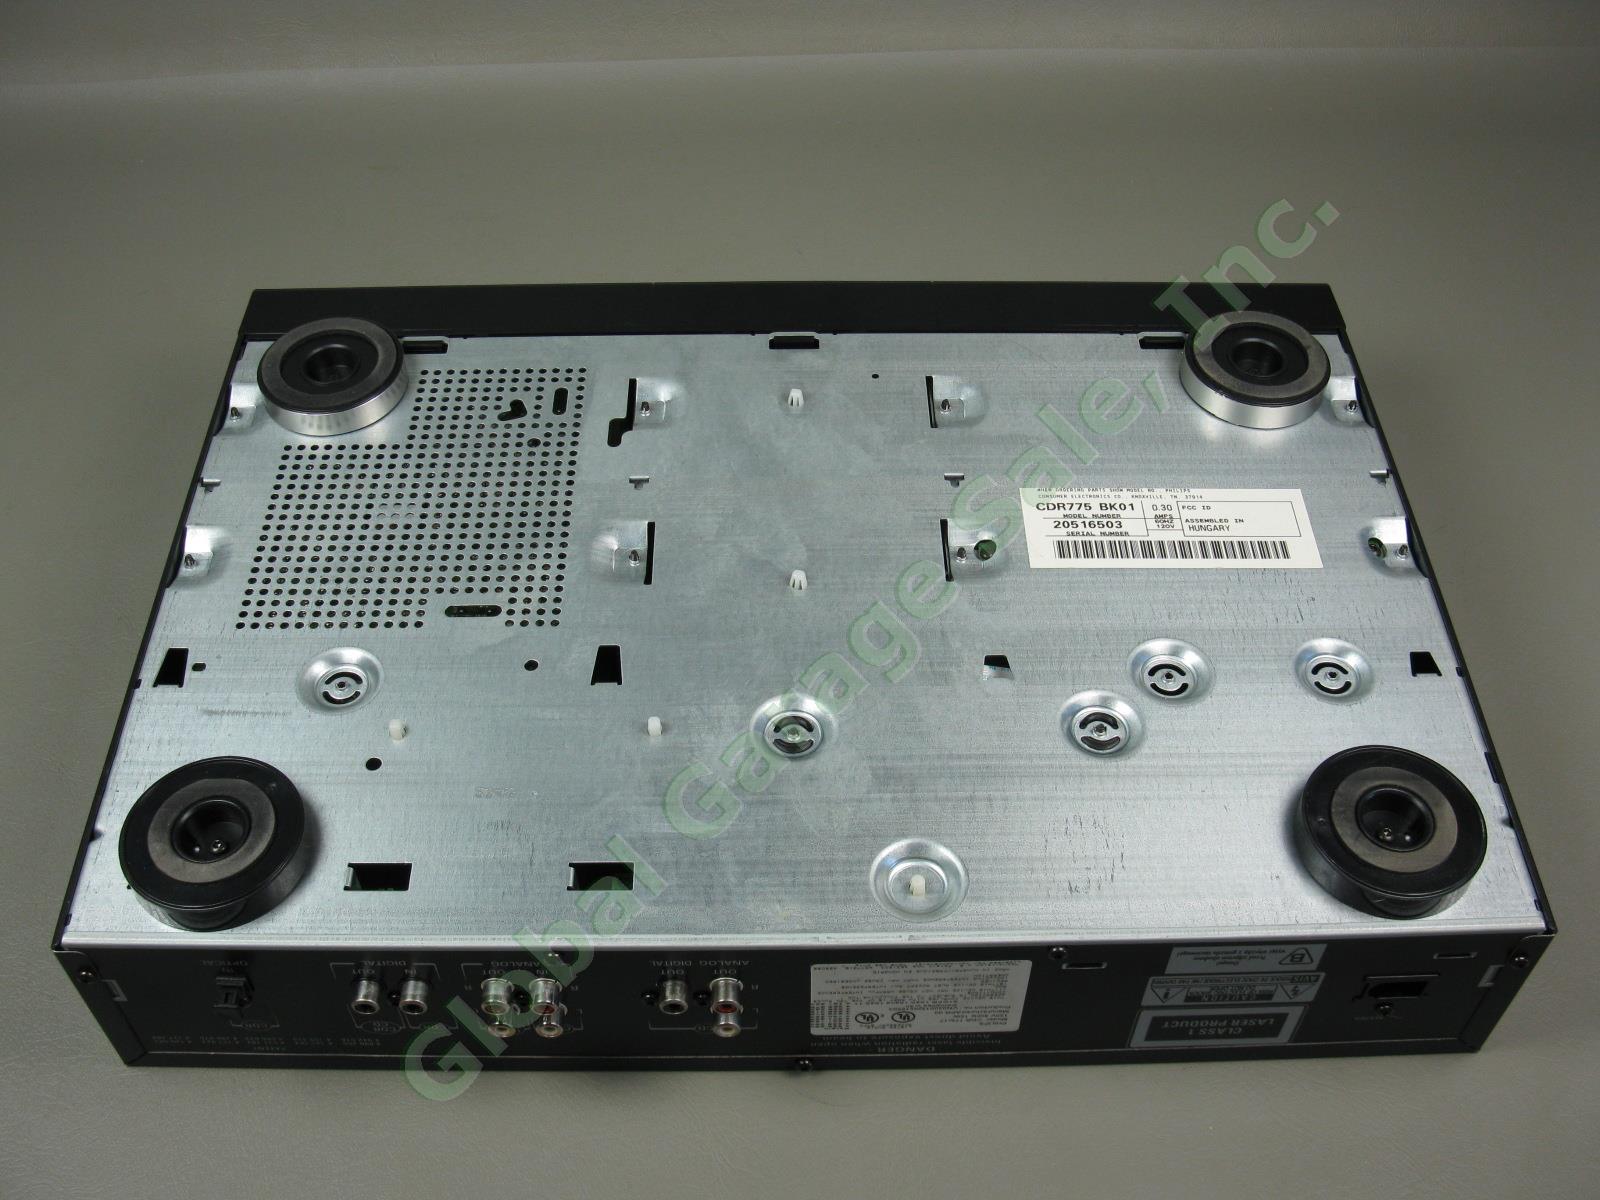 Philips CDR775 Dual Deck Audio CD Recorder Copier Burner + Remote Manual Bundle+ 9